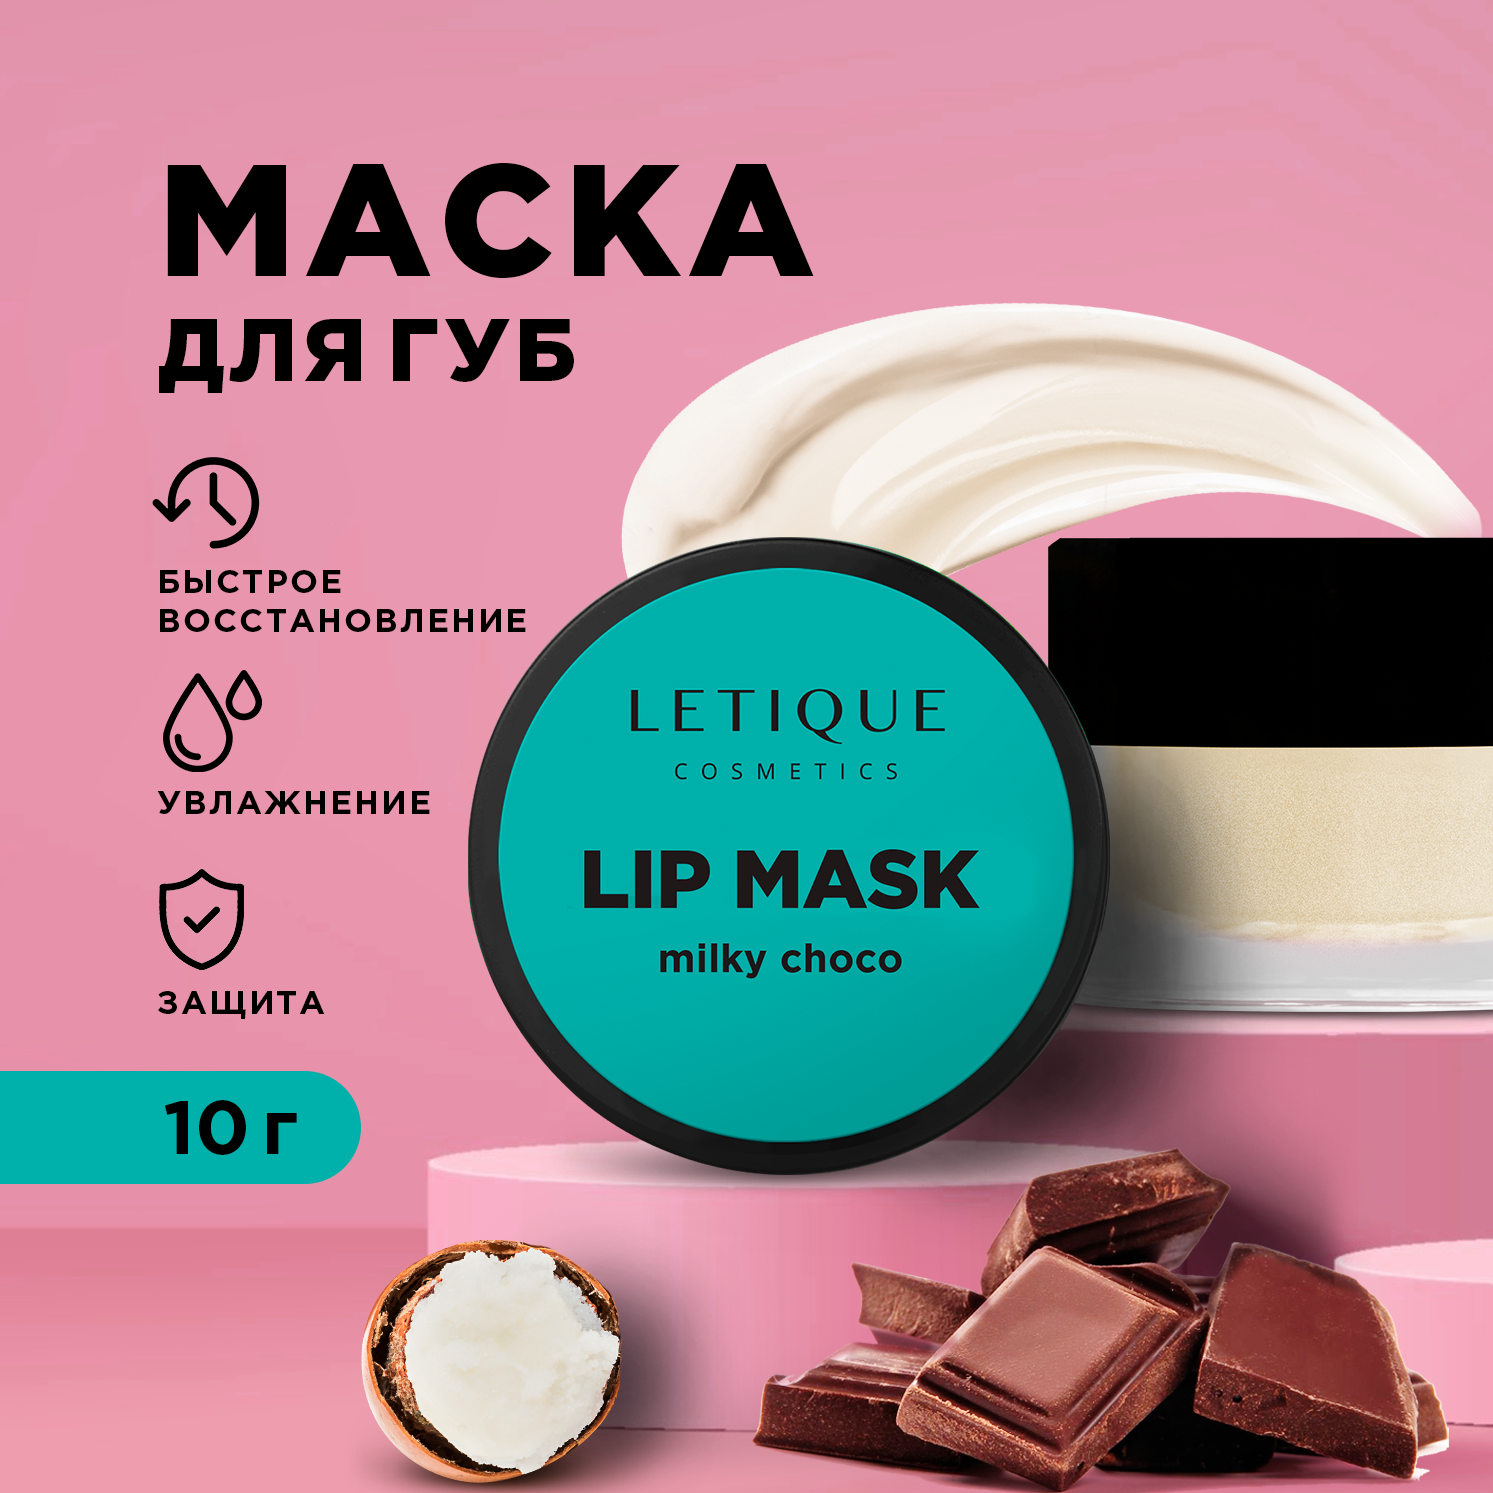 Маска для губ Letique Cosmetics Lip Mask Milky Choco 10 г